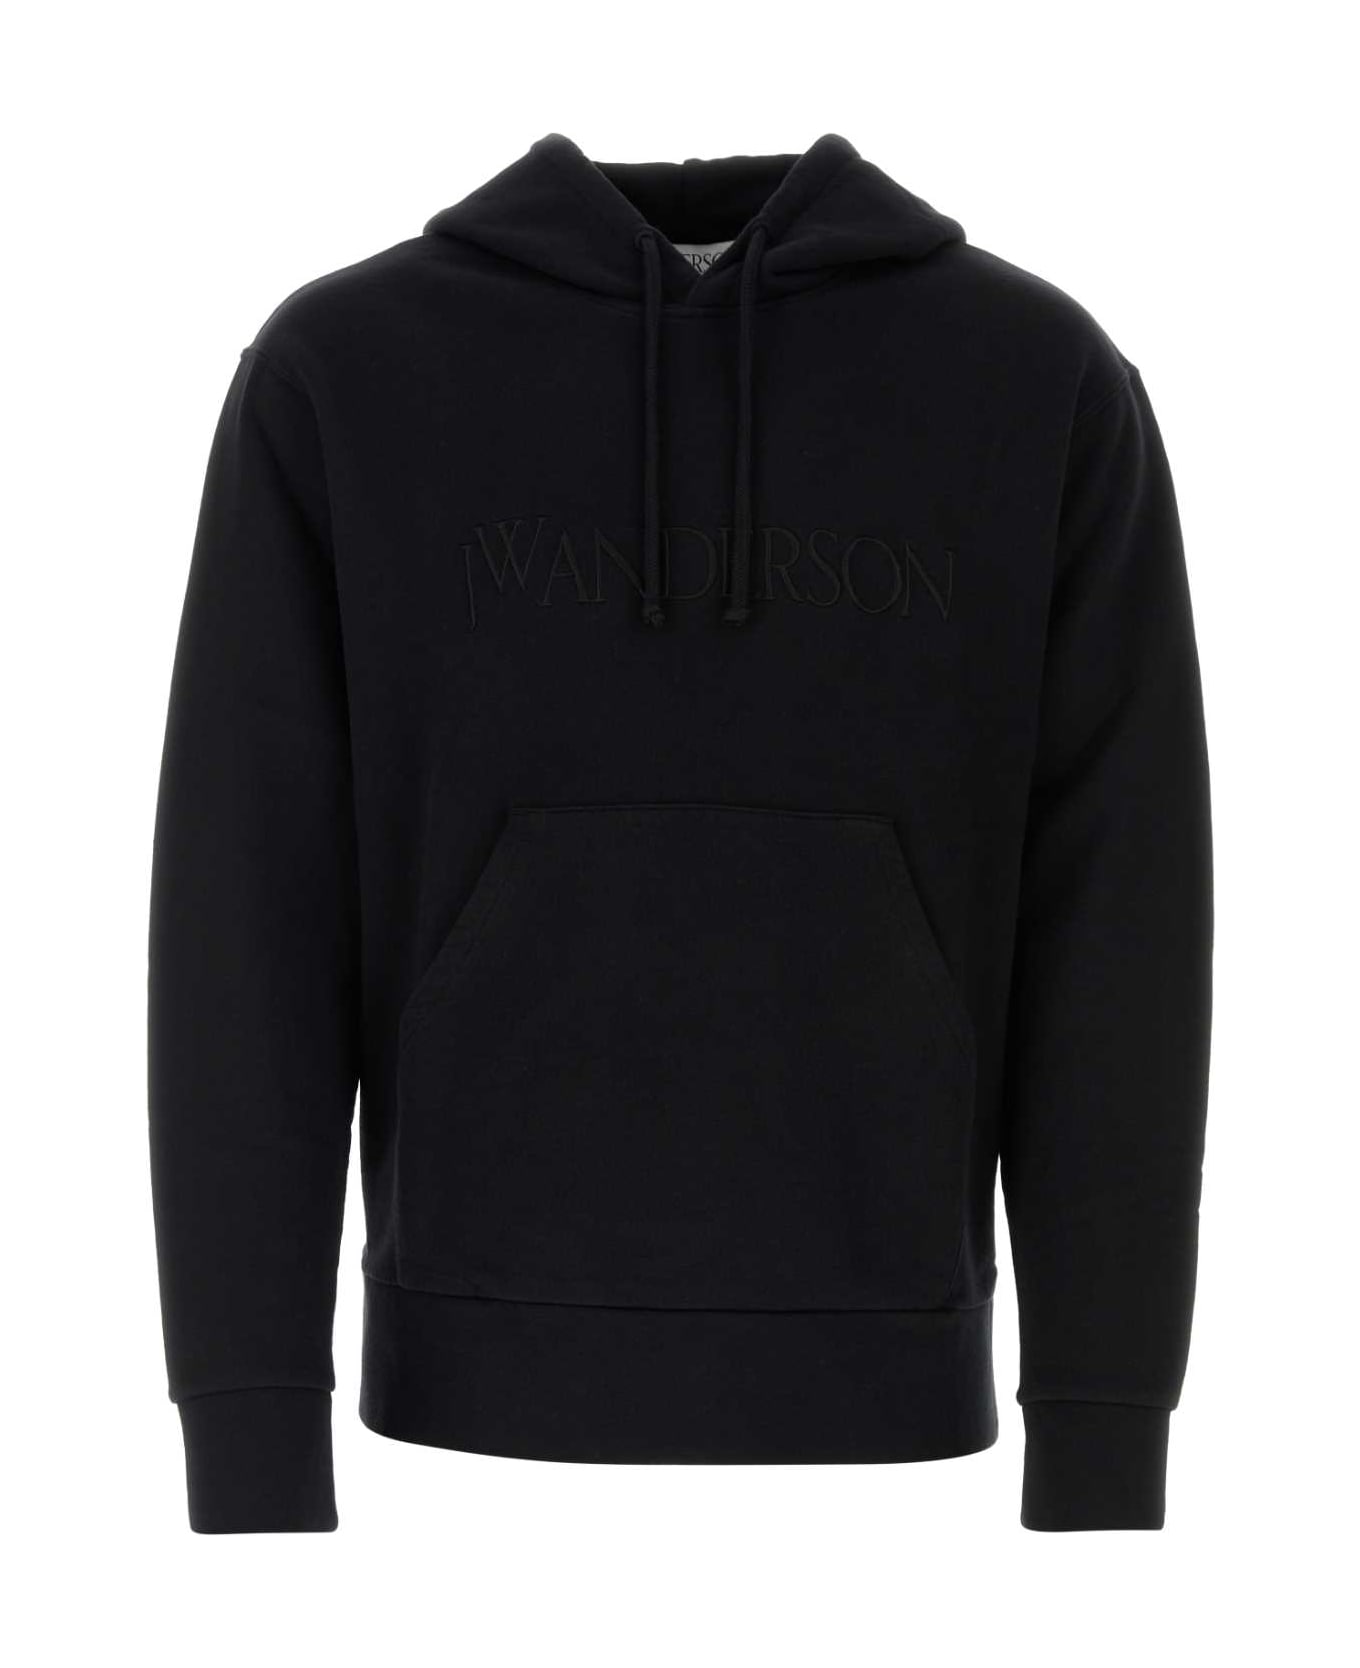 J.W. Anderson Black Cotton Sweatshirt - Black